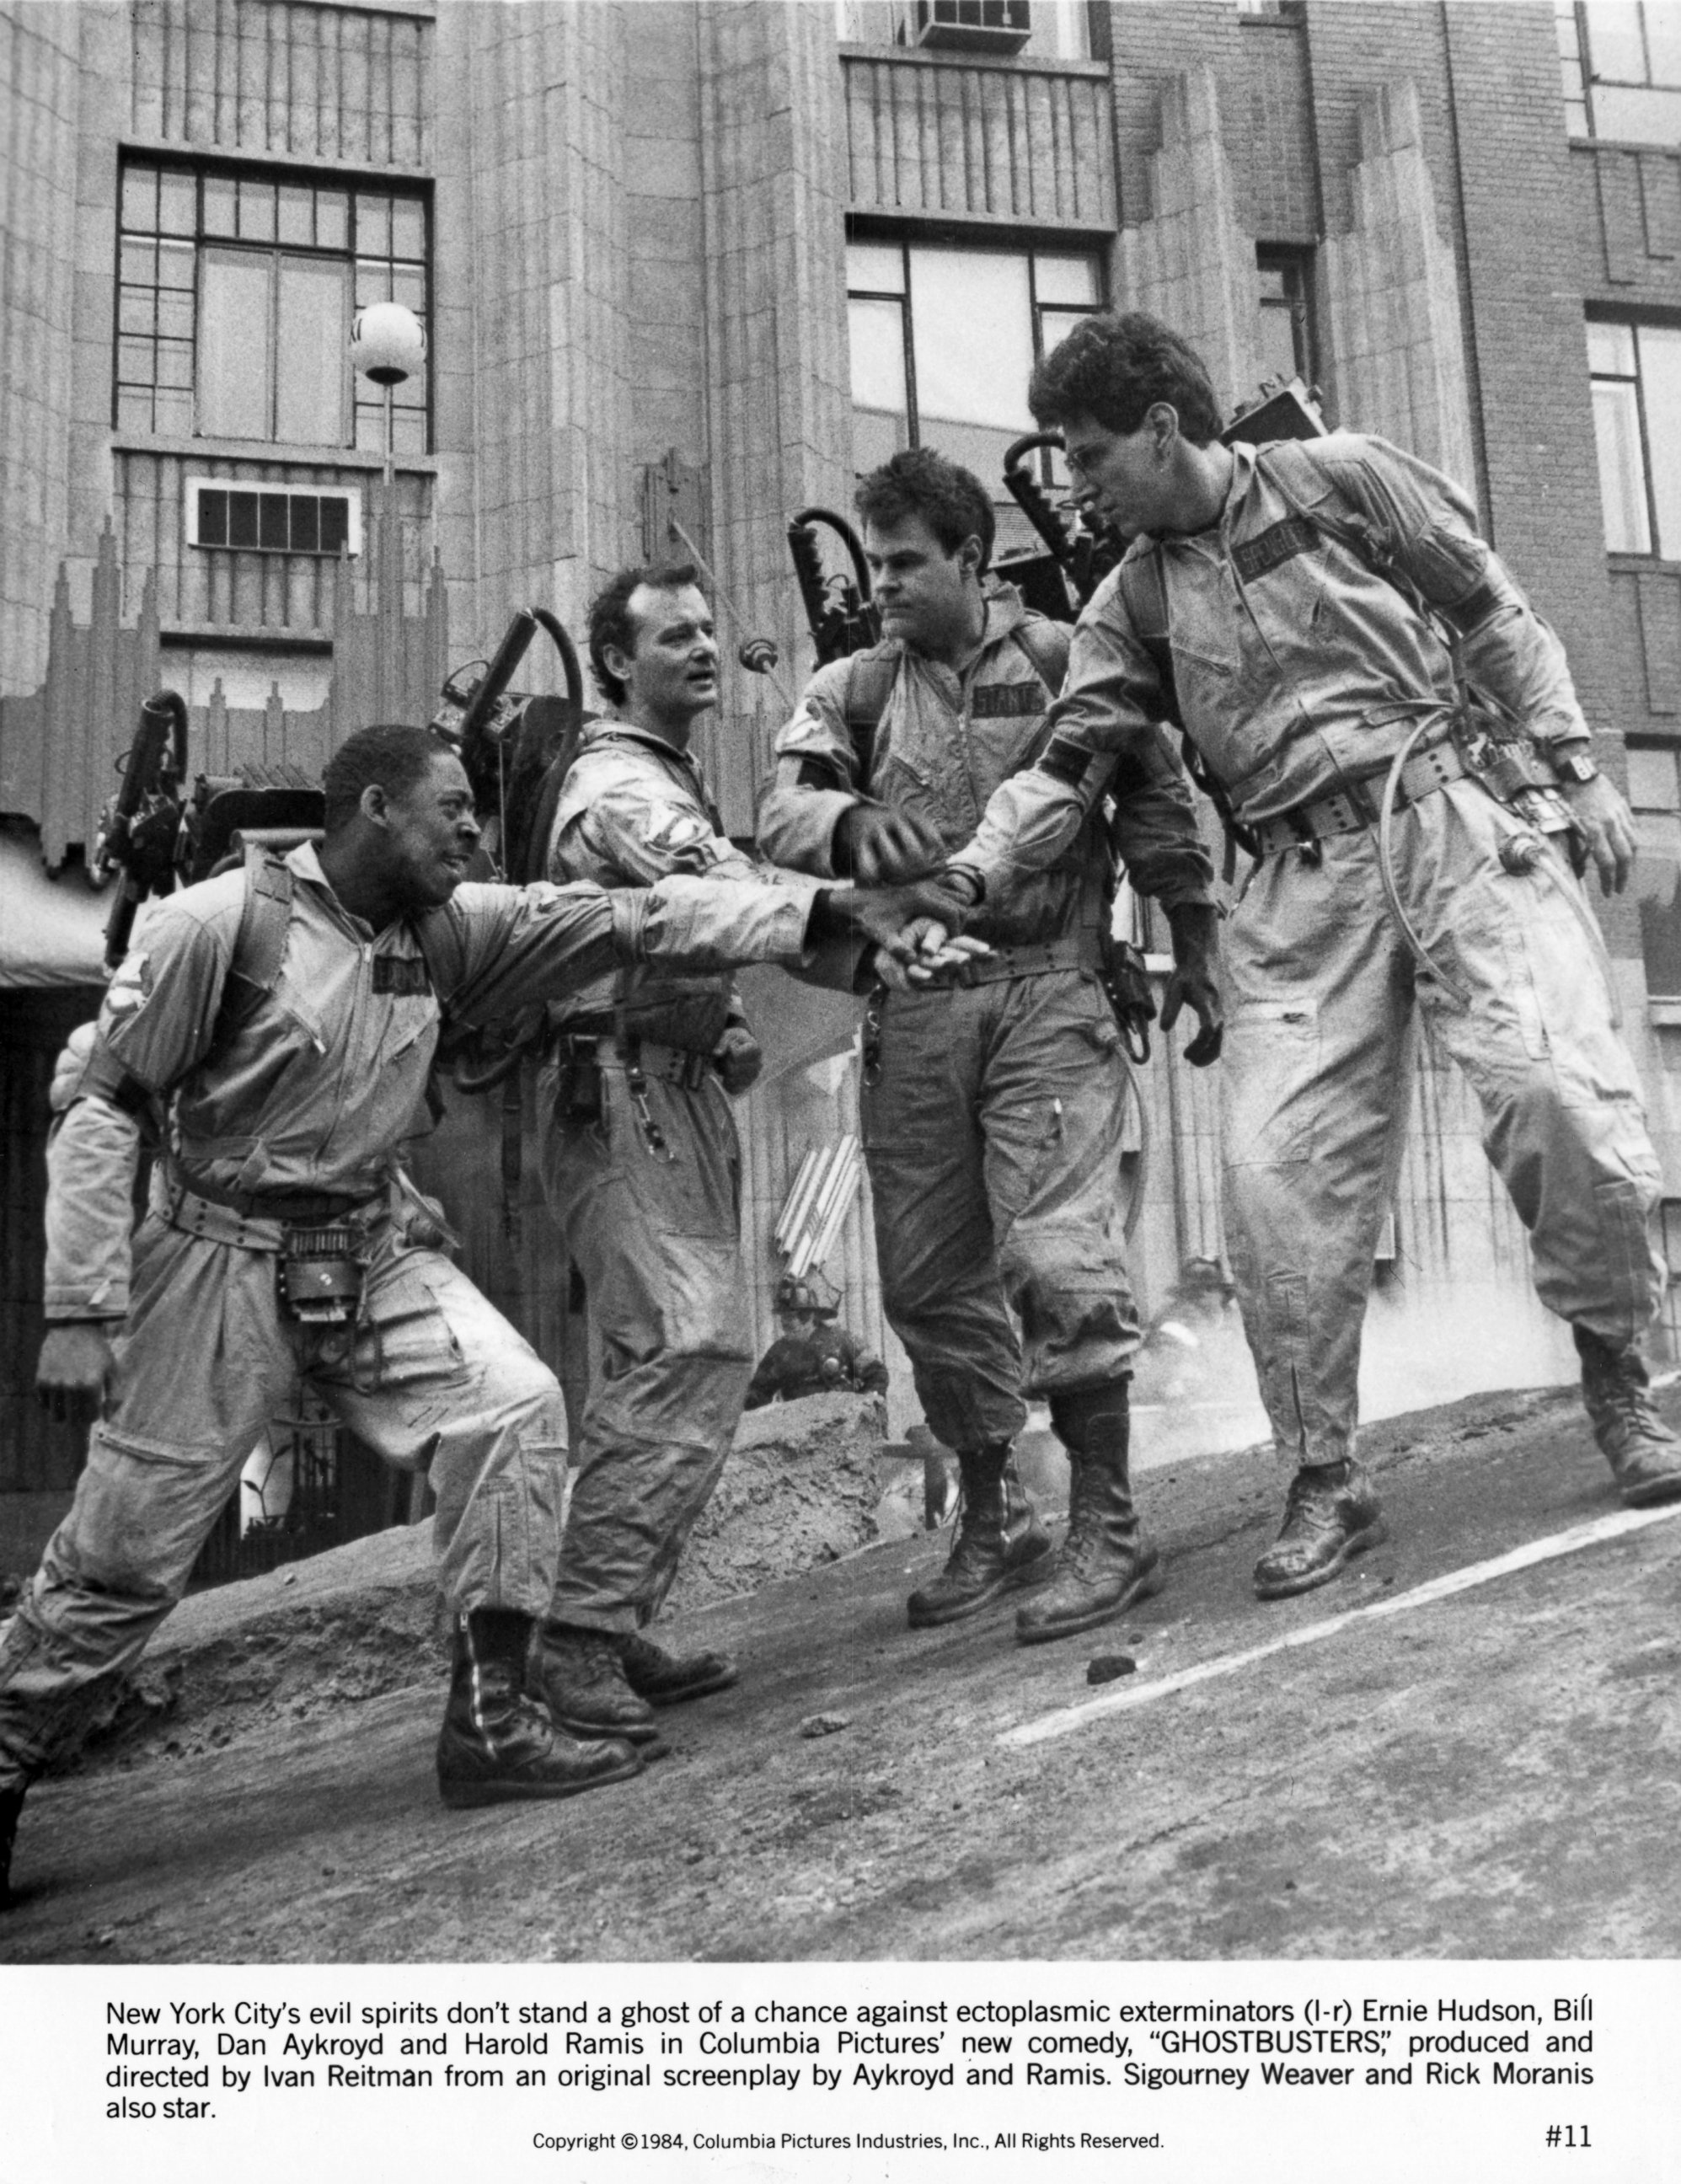 The Day Bill Murray, Dan Aykroyd, and Ernie Hudson Became Ghostbusters  Again